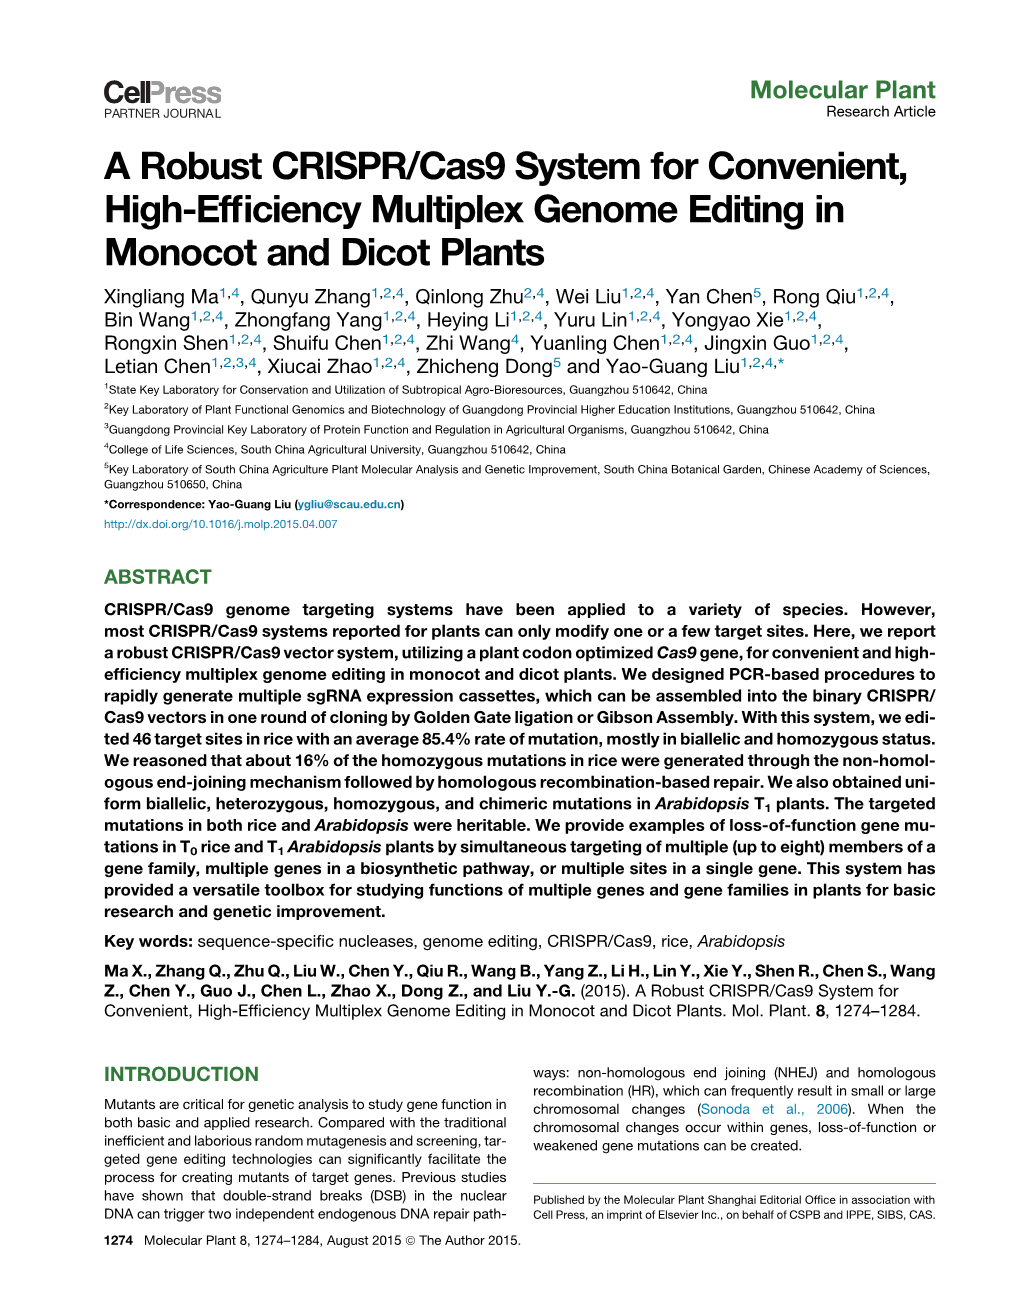 A Robust CRISPR/Cas9 System for Convenient, High-Efficiency